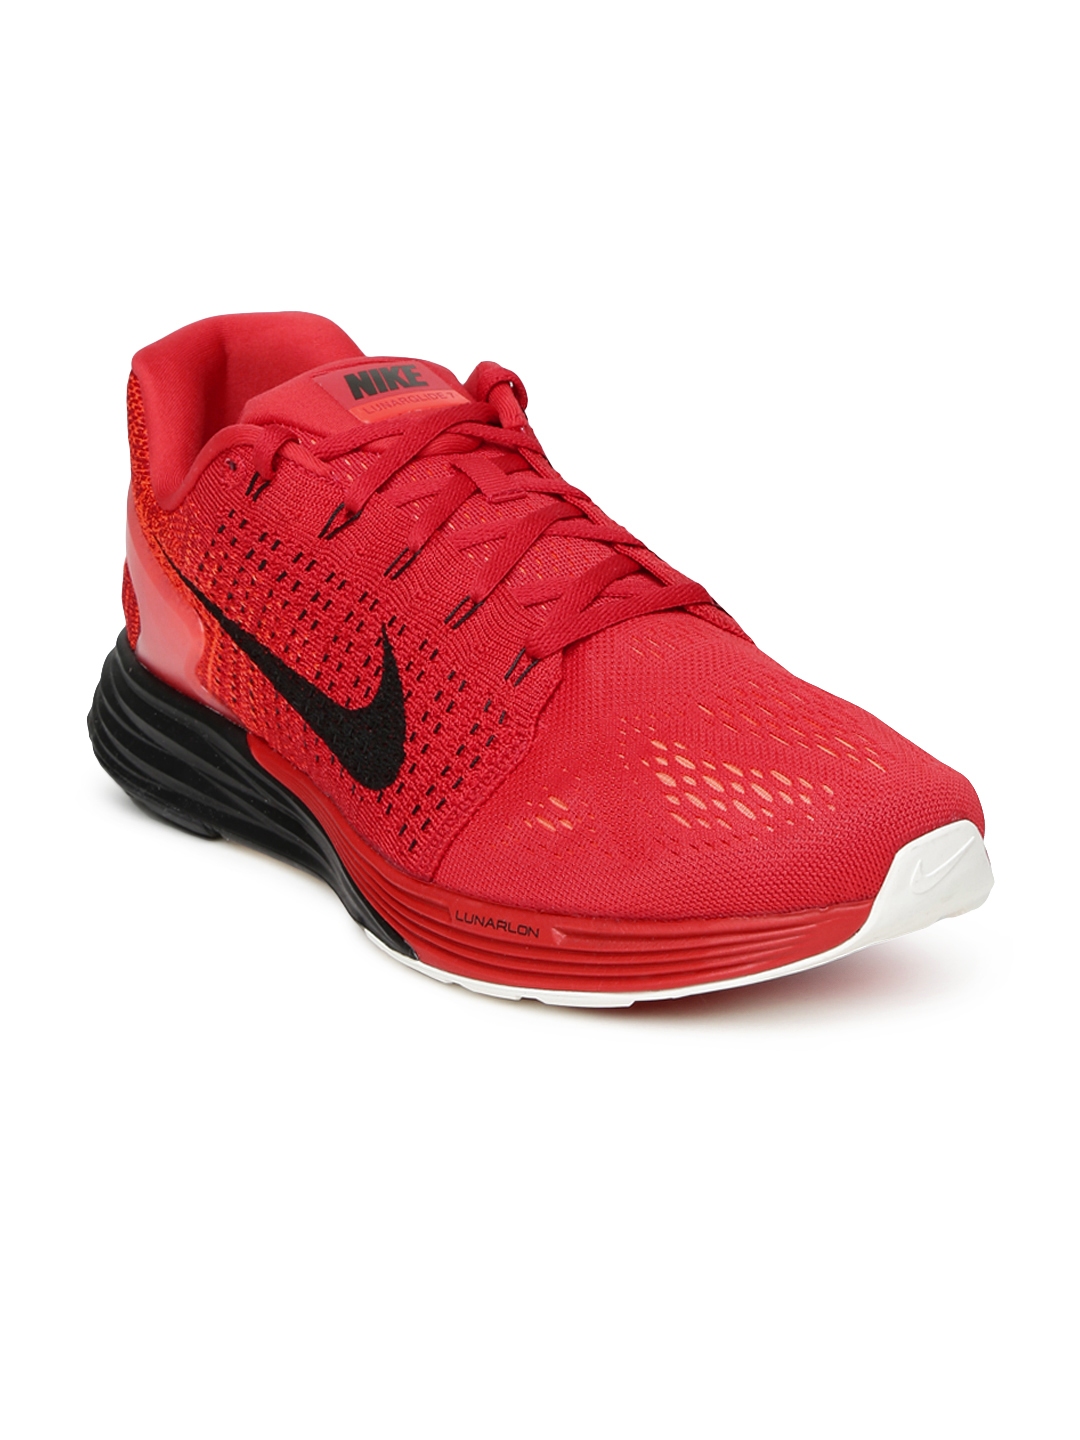 Buy Nike Men Red Lunarglide 7 Running Shoes - Sports Shoes for Men ...